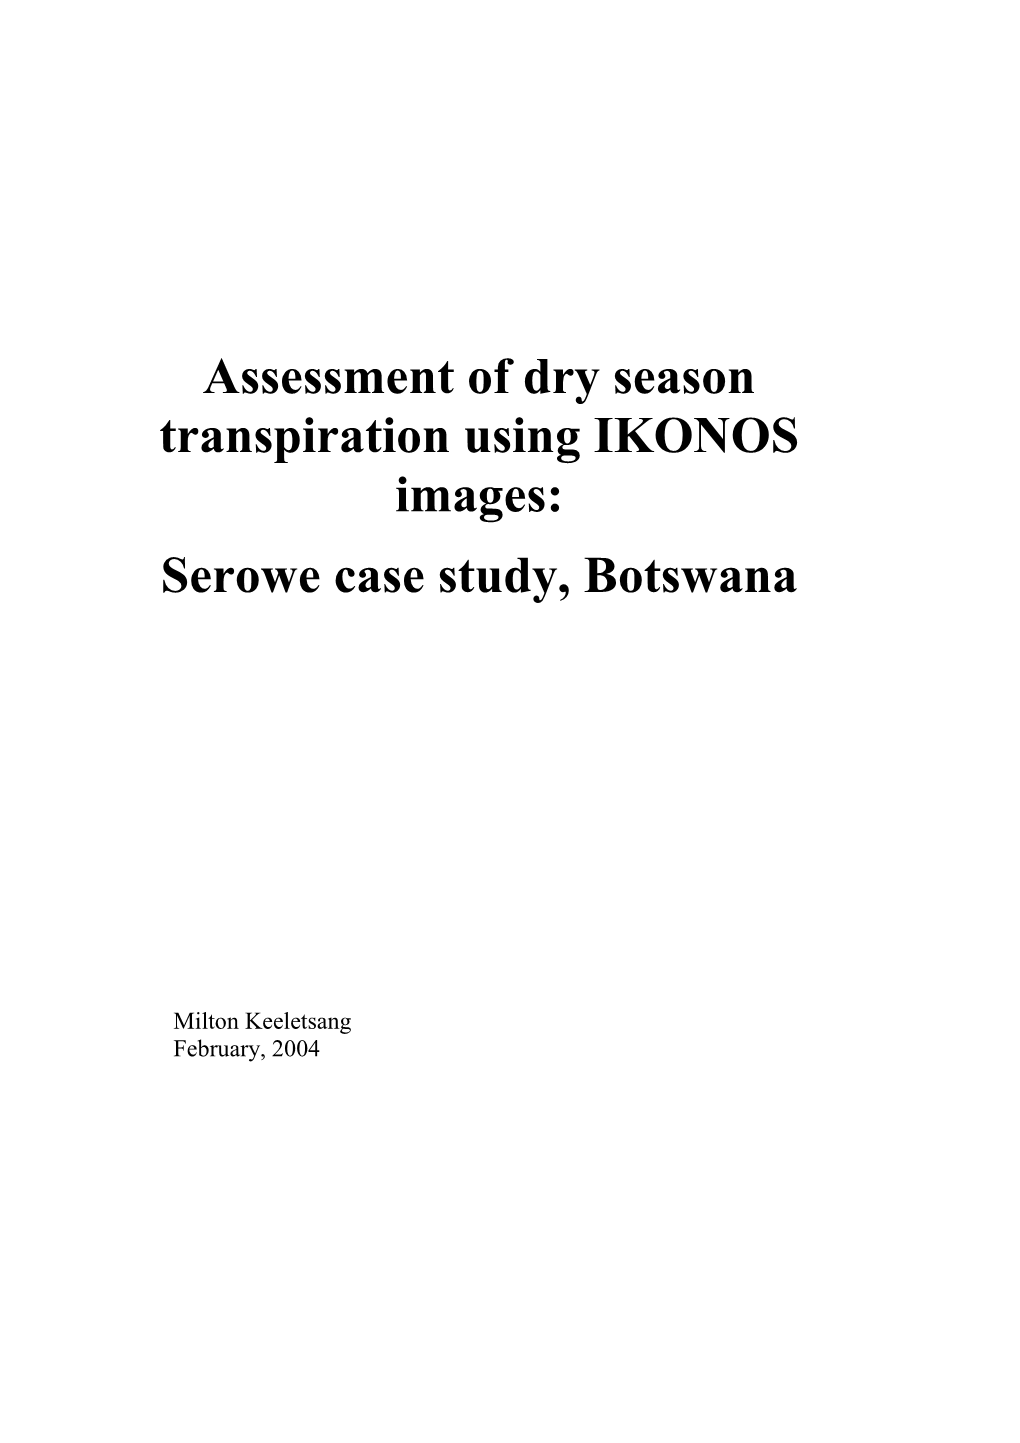 Assessment of Dry Season Transpiration Using IKONOS Images: Serowe Case Study, Botswana